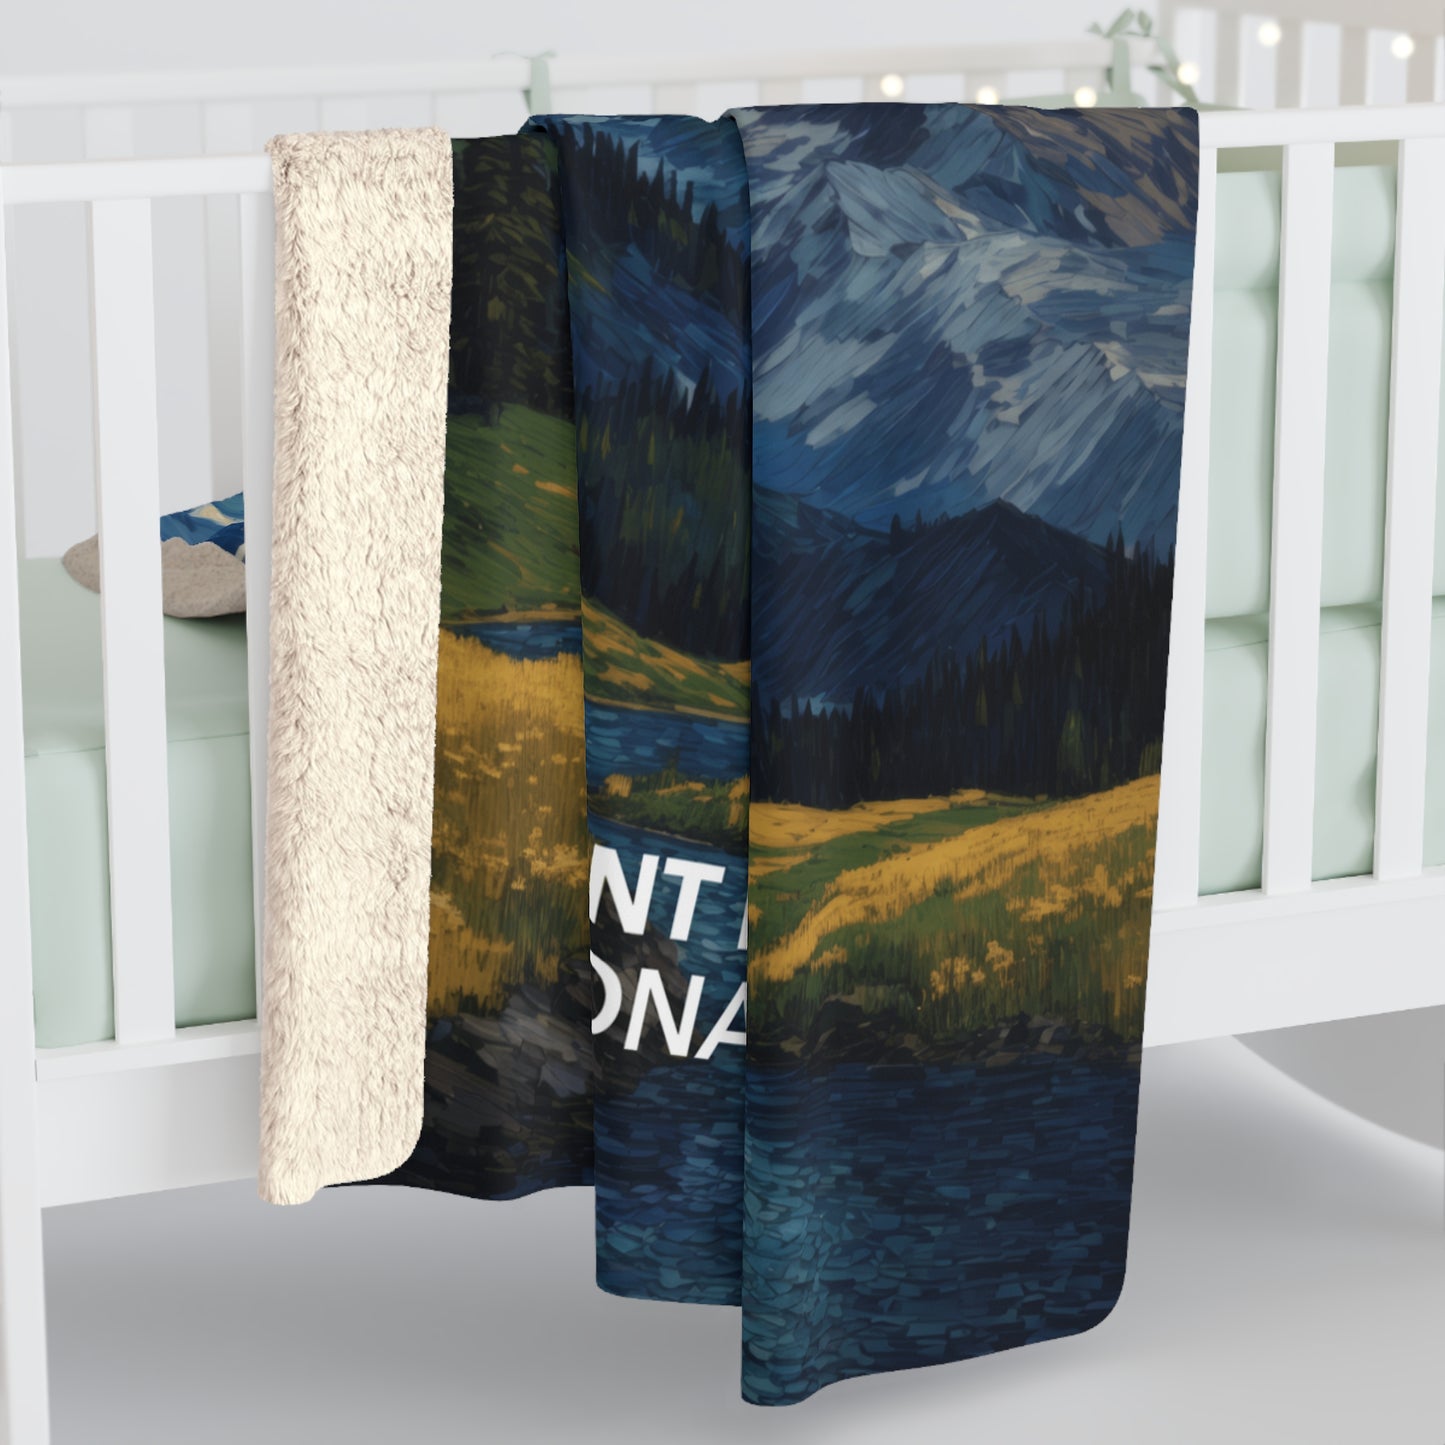 Mount Rainier National Park Sherpa Blanket - The Starry Night